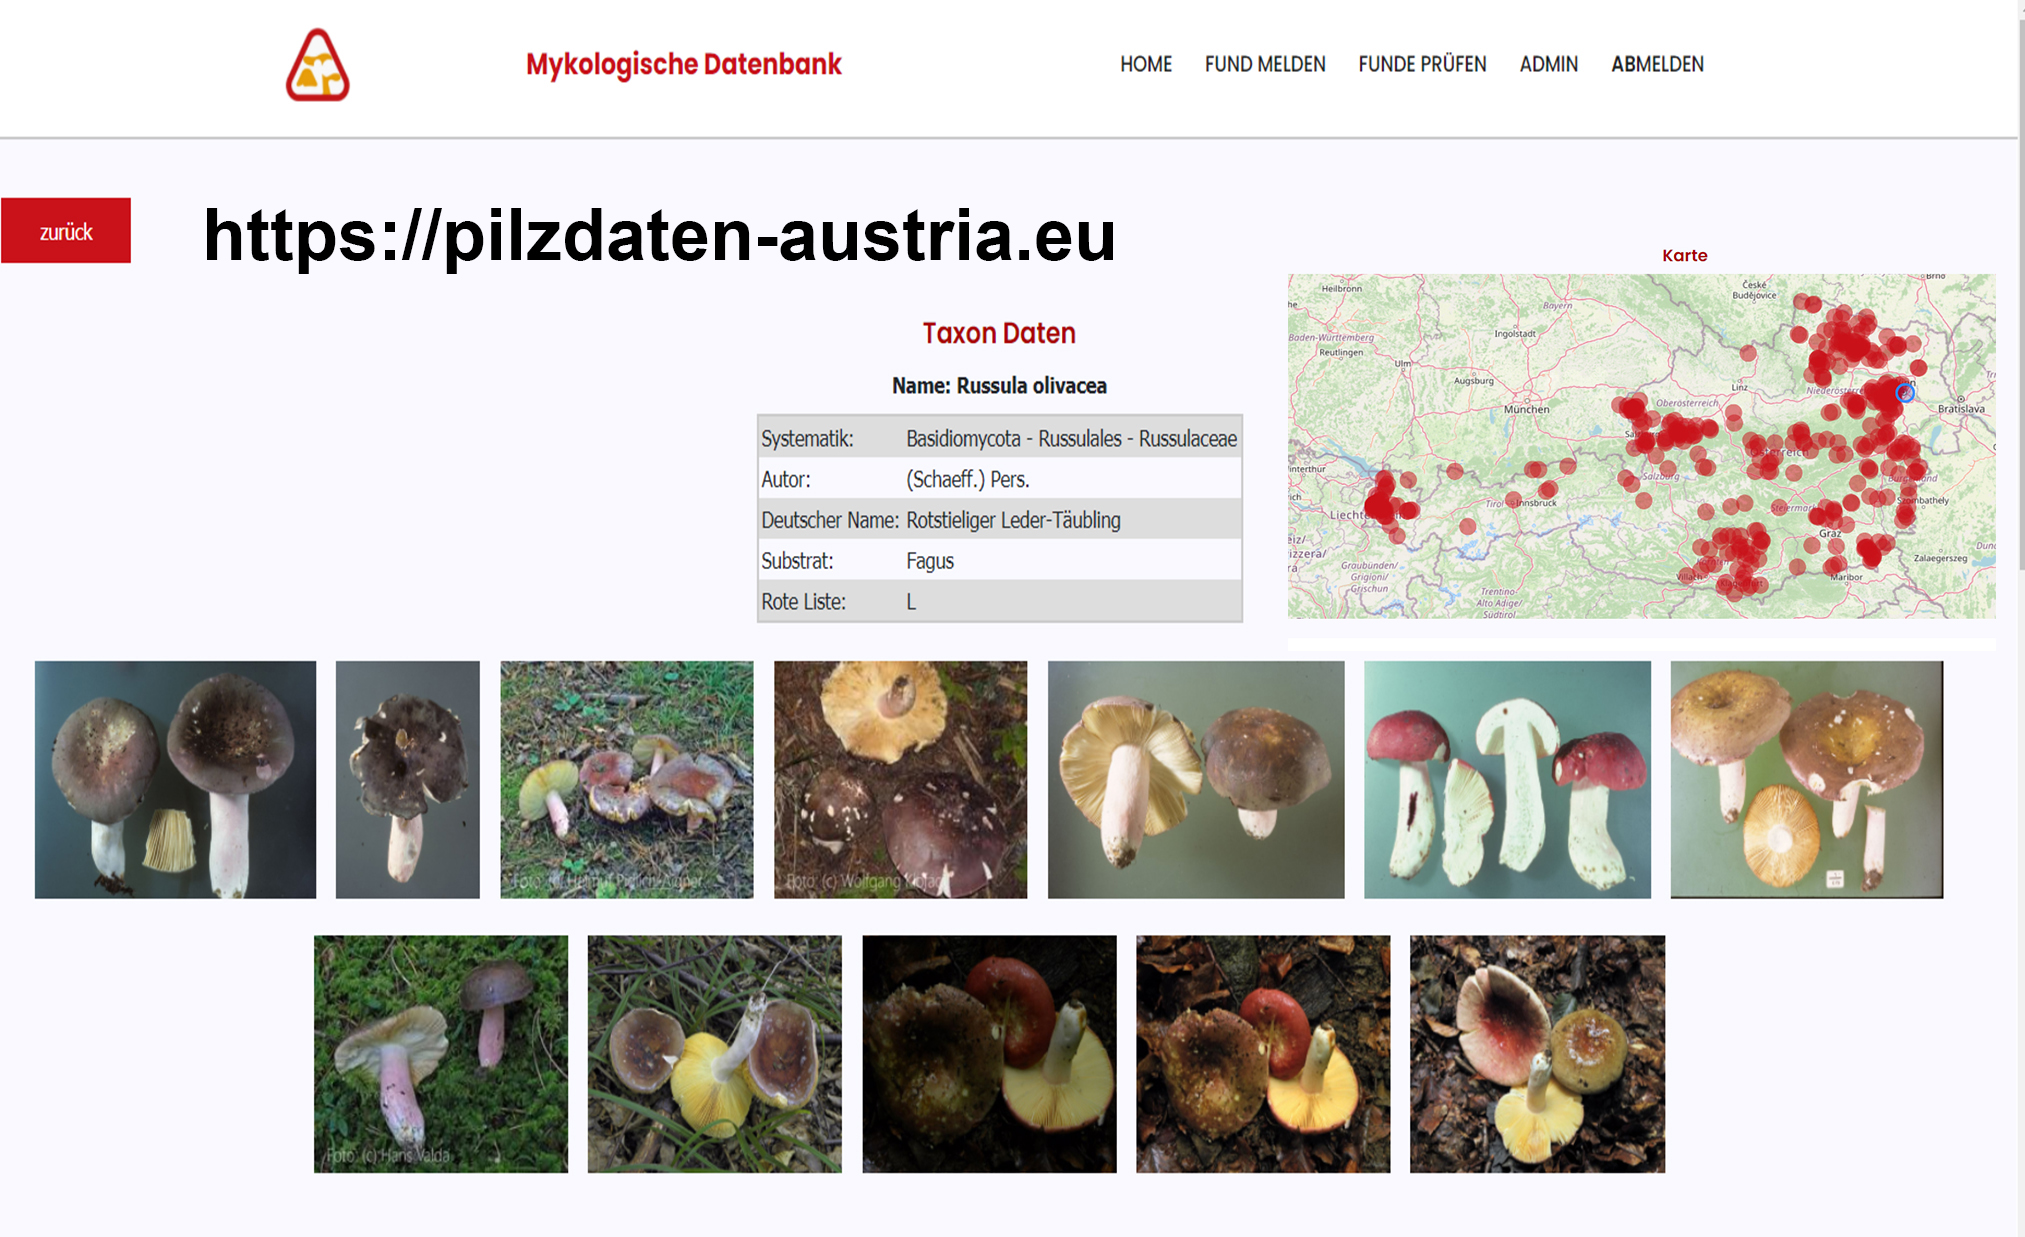 Website Oberfläche der Datenbank der Pilze Österreichs